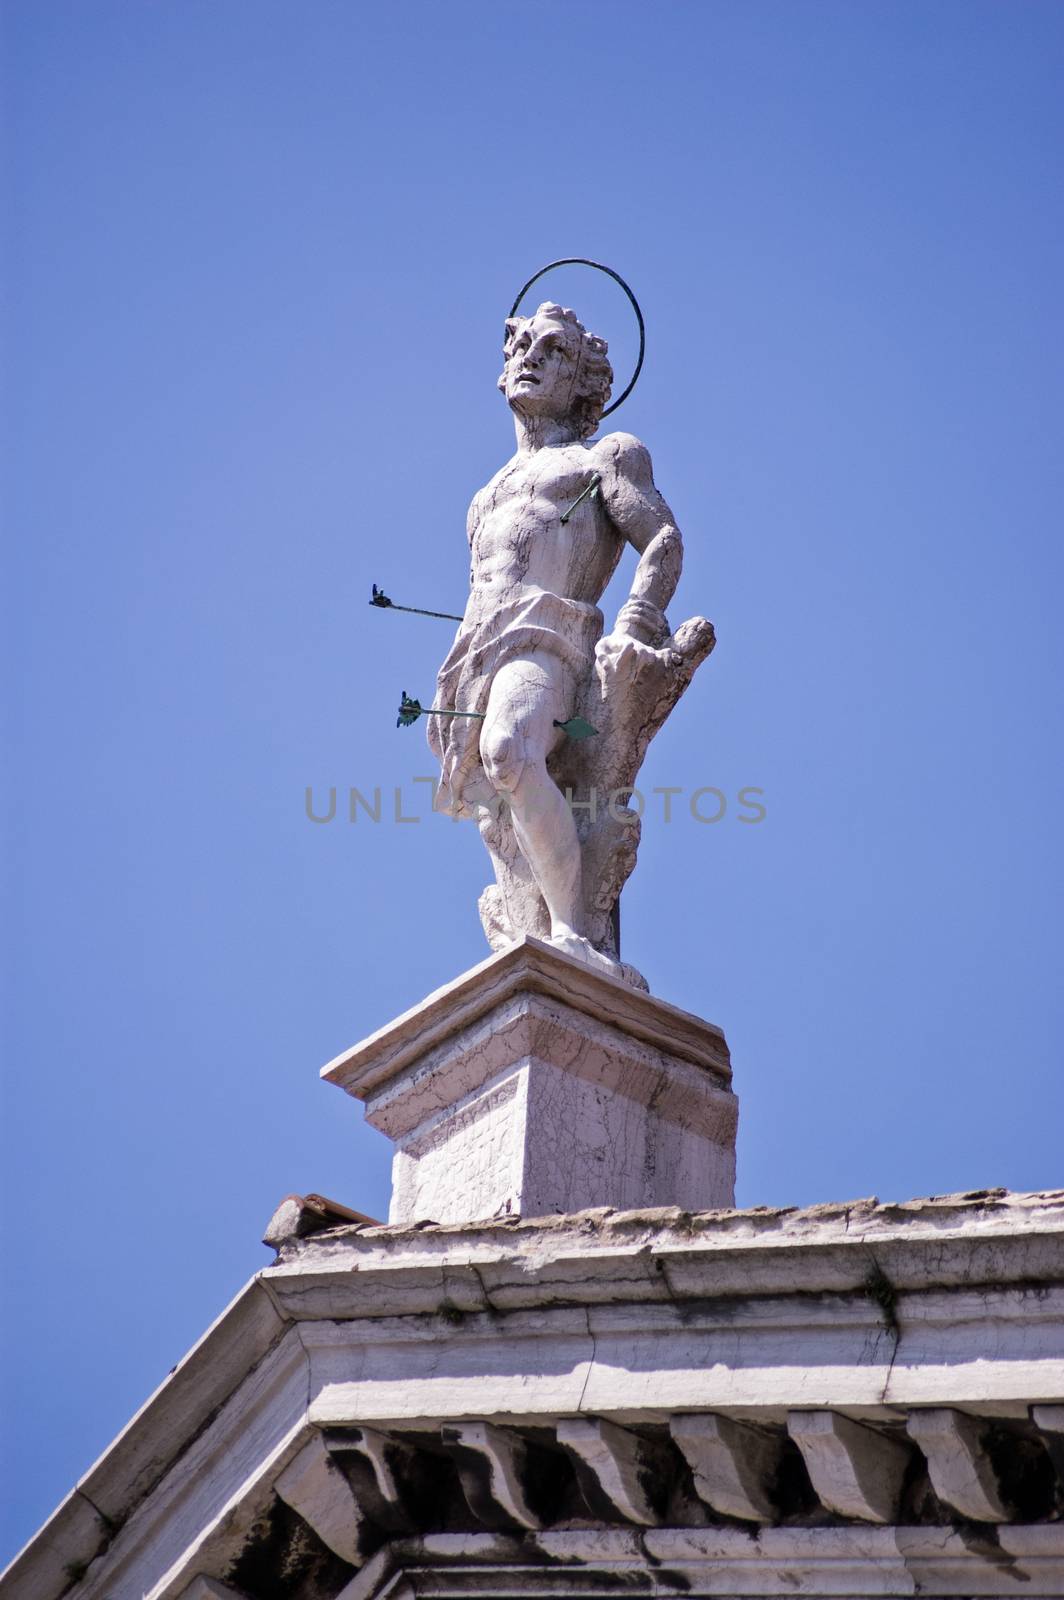 Statue of the Christian martyr Saint Sebastian. Shot with arrows, on top of the Chiesa di San Sebastiano, Venice, Italy.